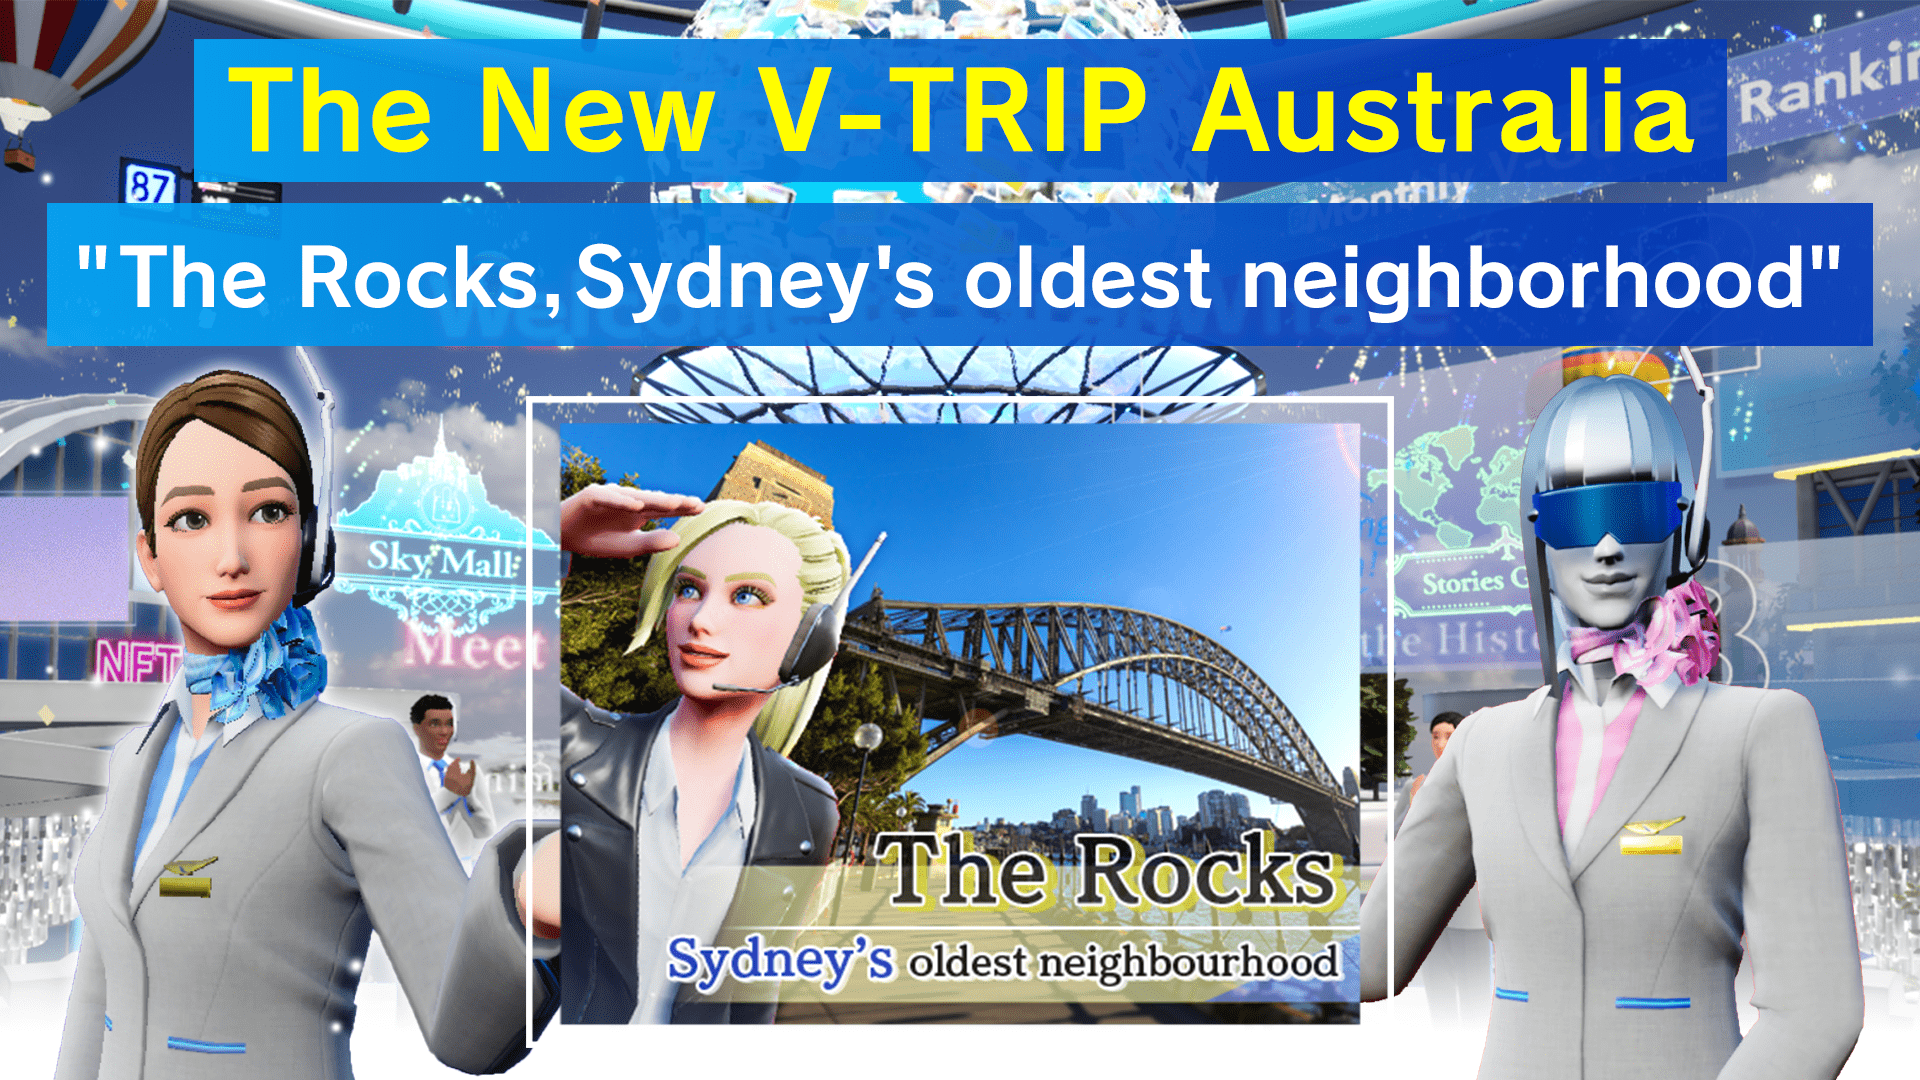 The New V-TRIP Australia 'The Rocks, Sydney's oldest neighborhood'